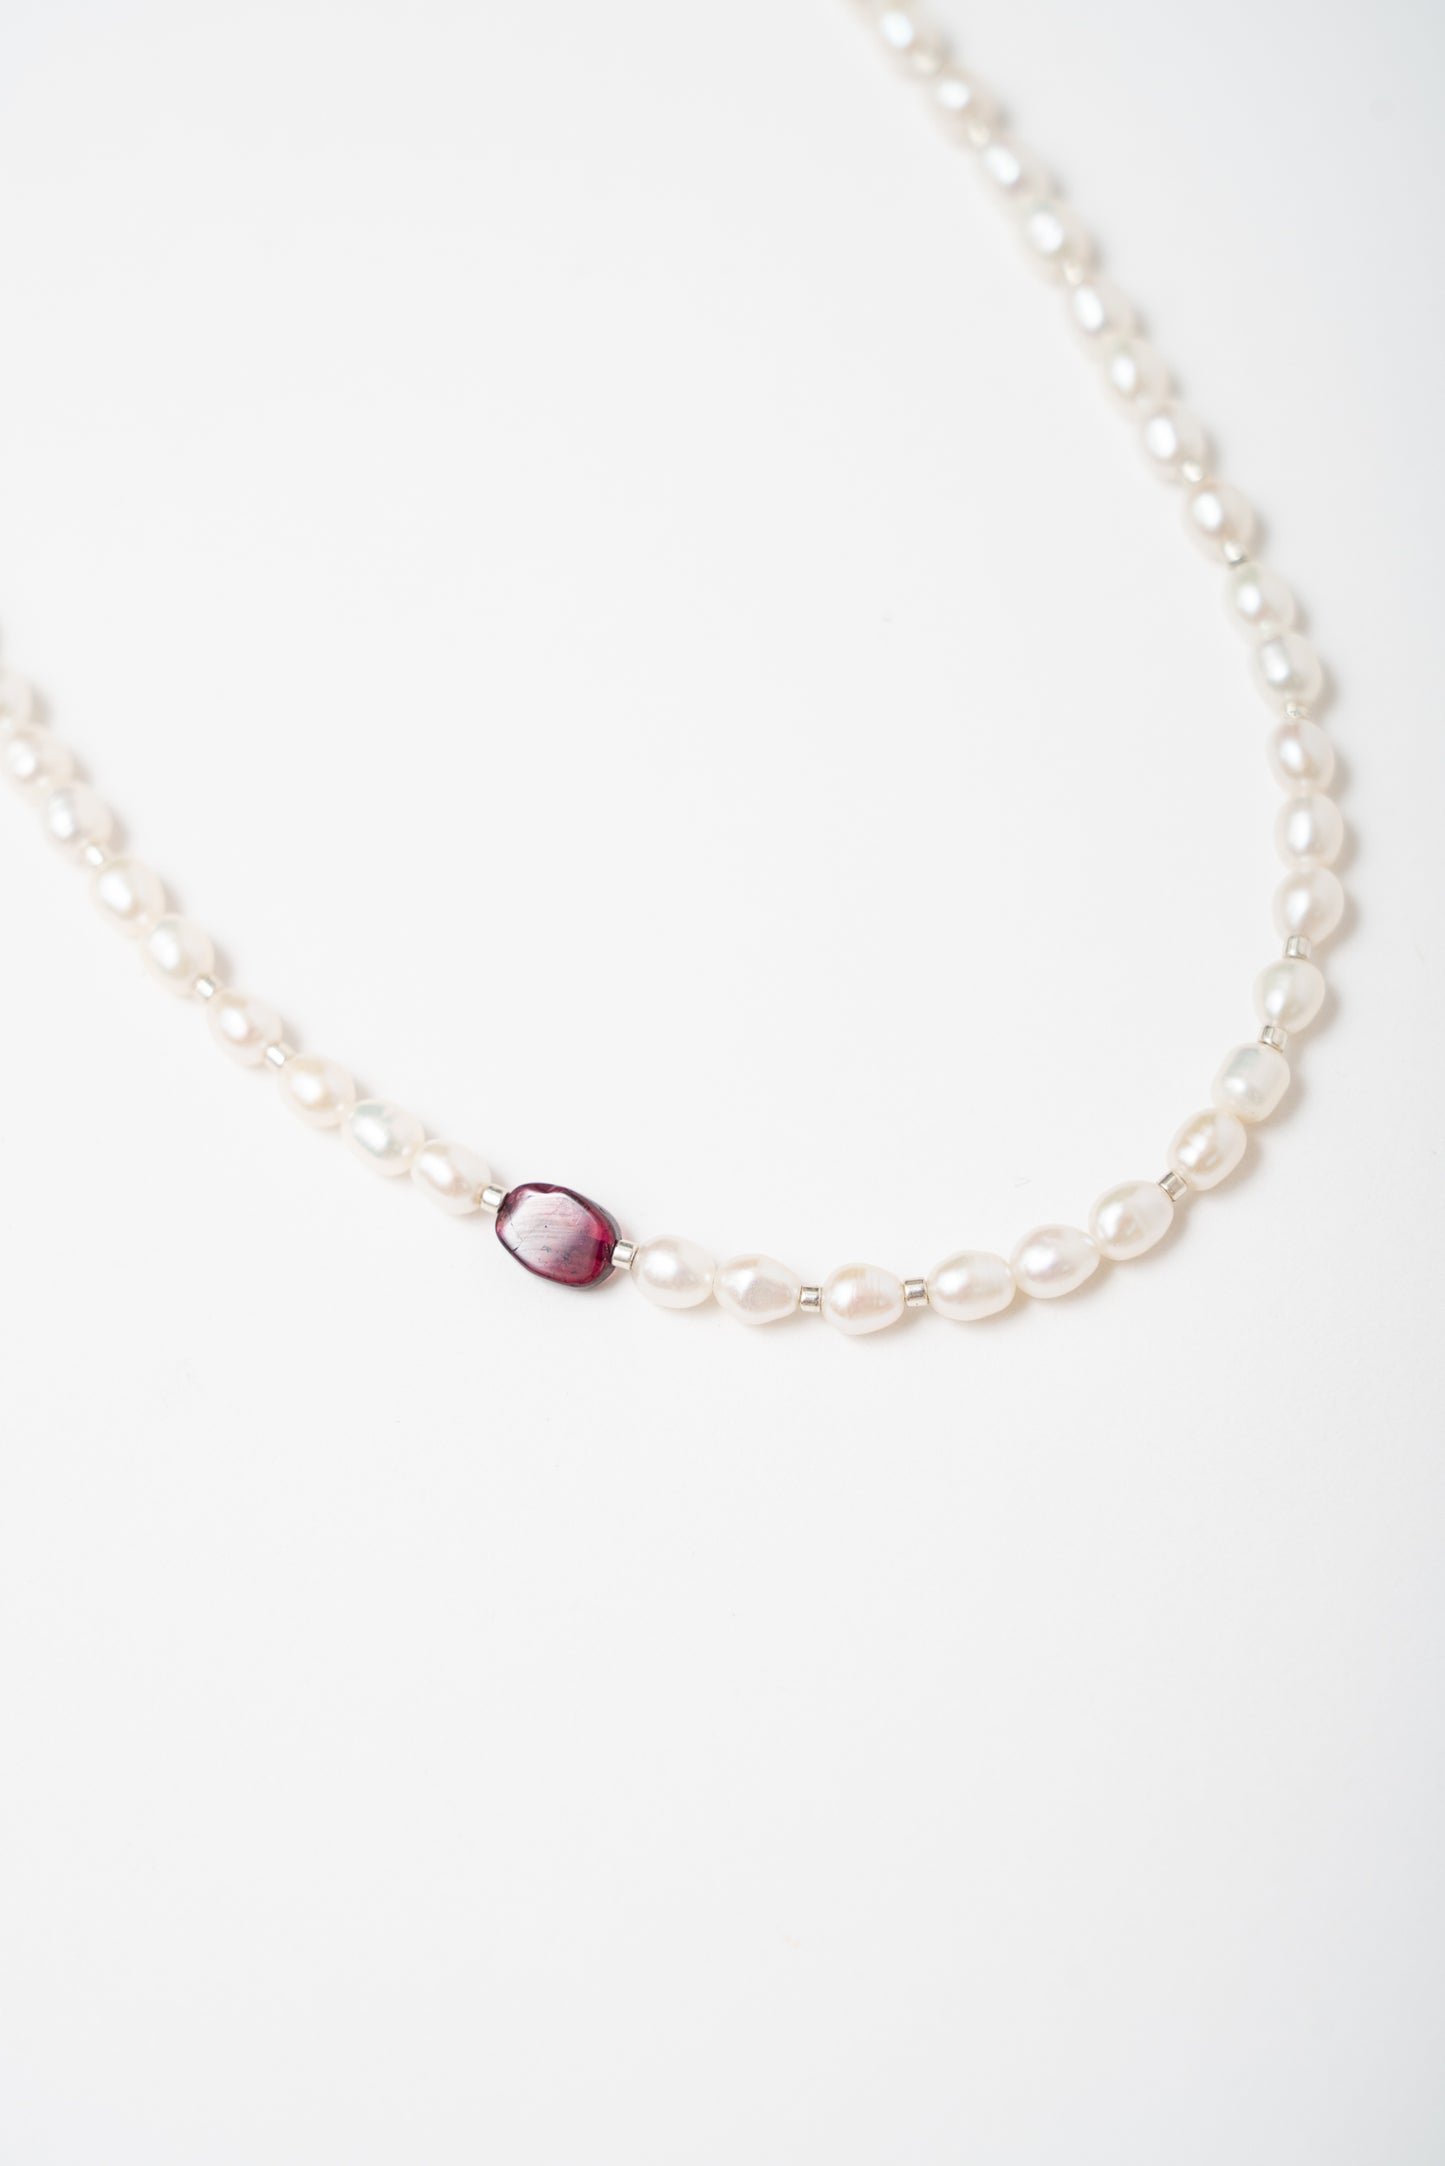 Freshwater Pearl + Garnet Necklace 18"